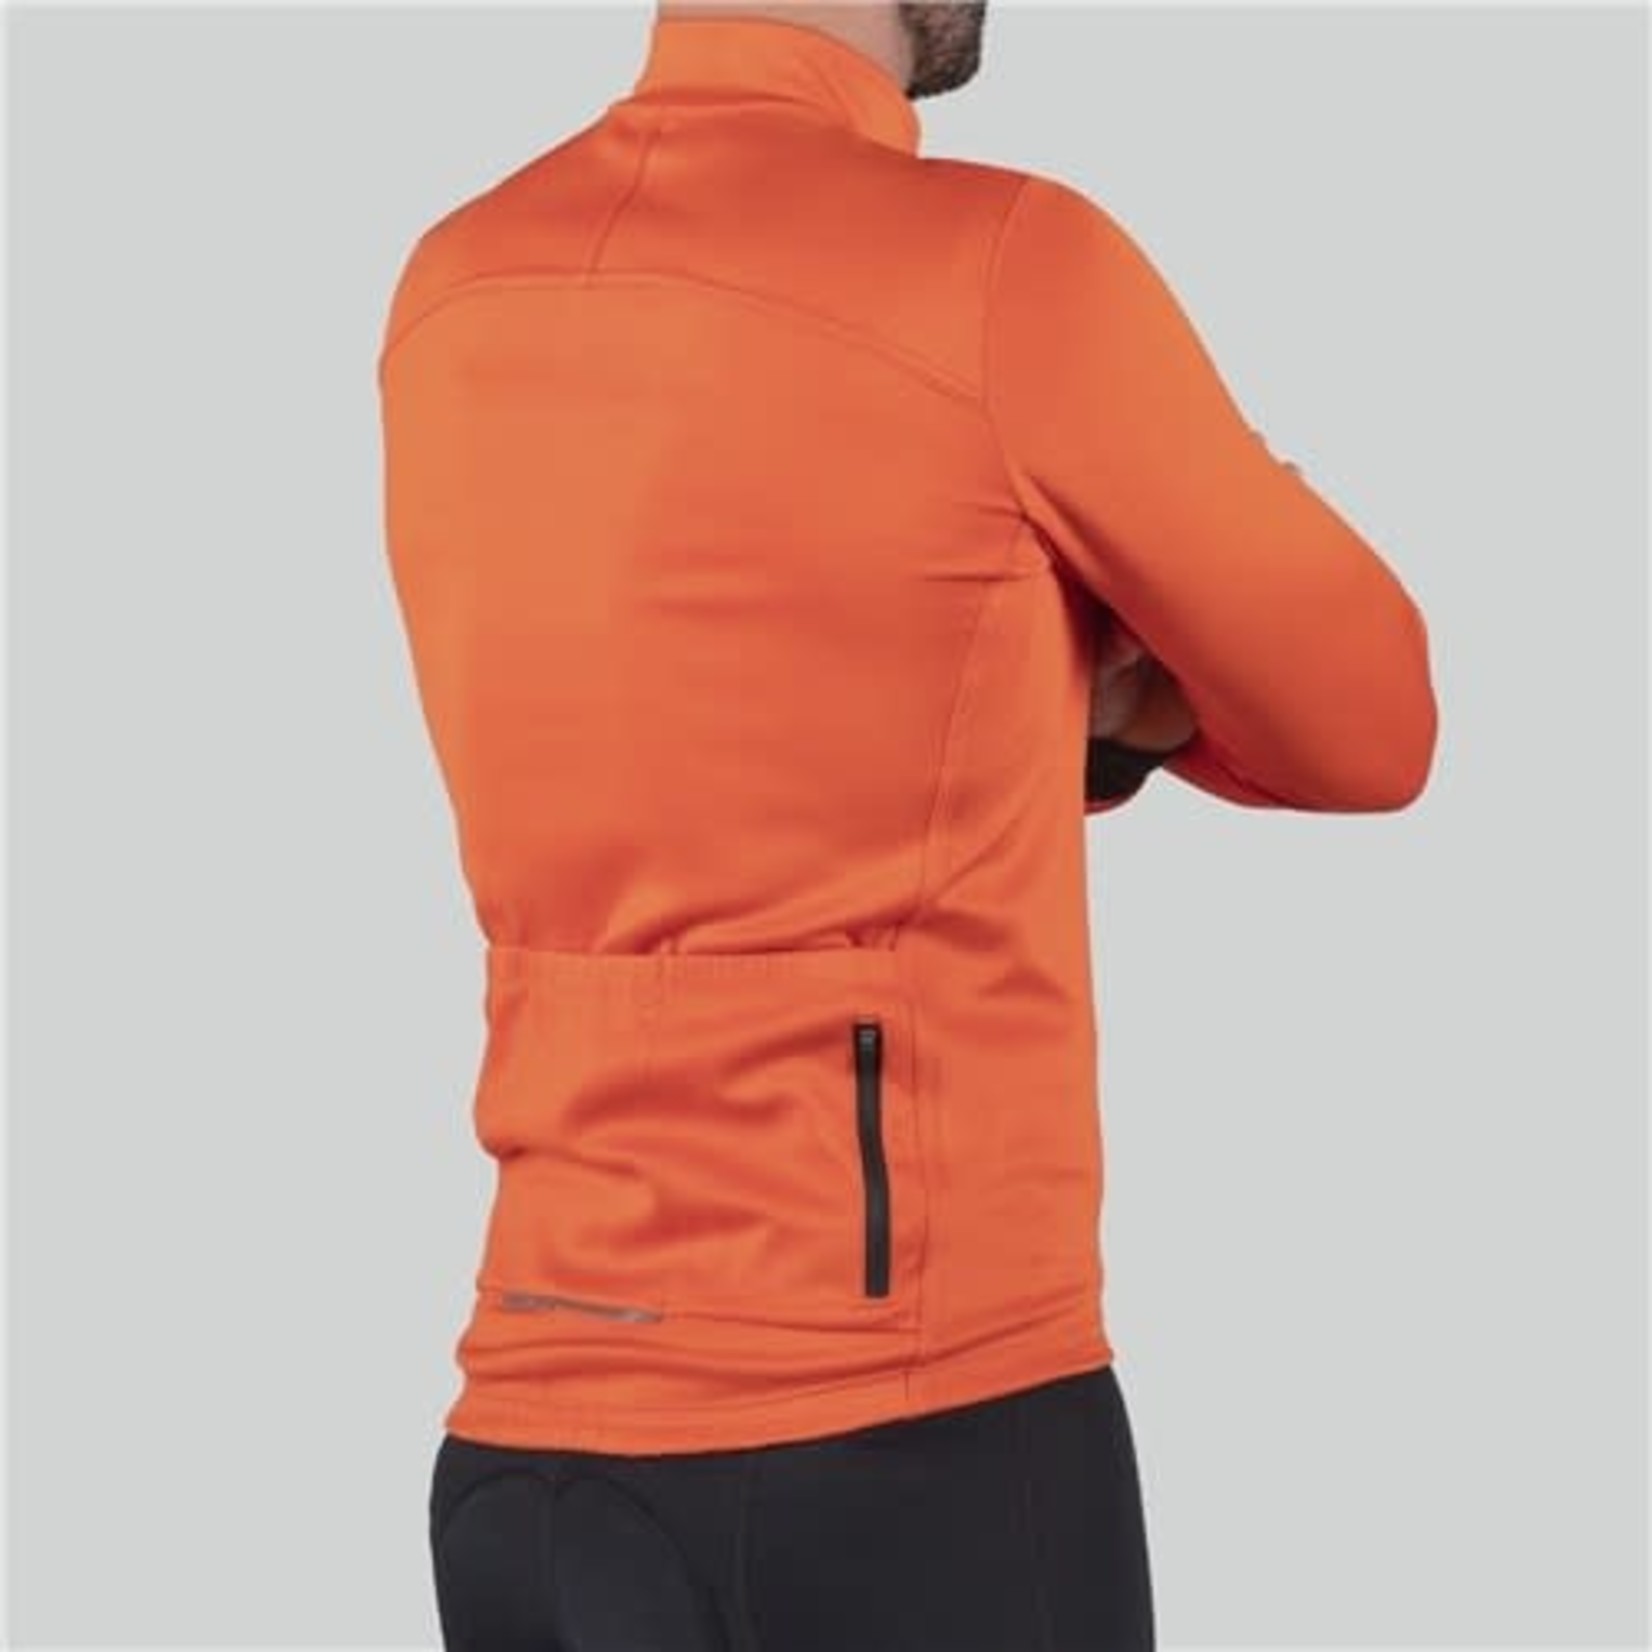 Bellwether Bellwether Men's Prestige Thermal Long Sleeve Jersey - Orange